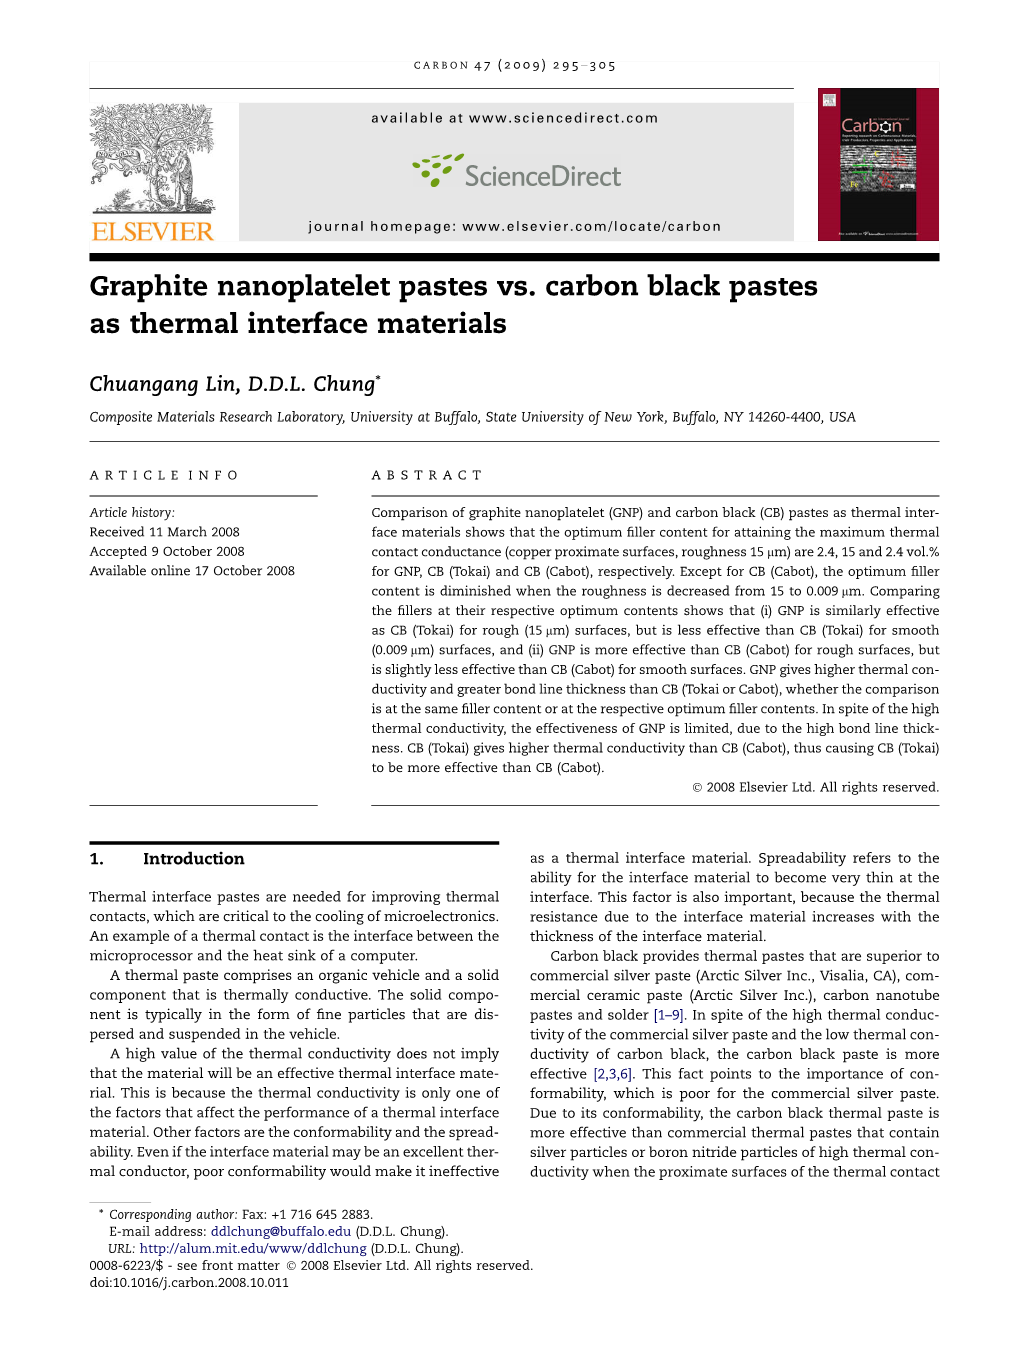 Graphite Nanoplatelet Pastes Vs. Carbon Black Pastes As Thermal Interface Materials